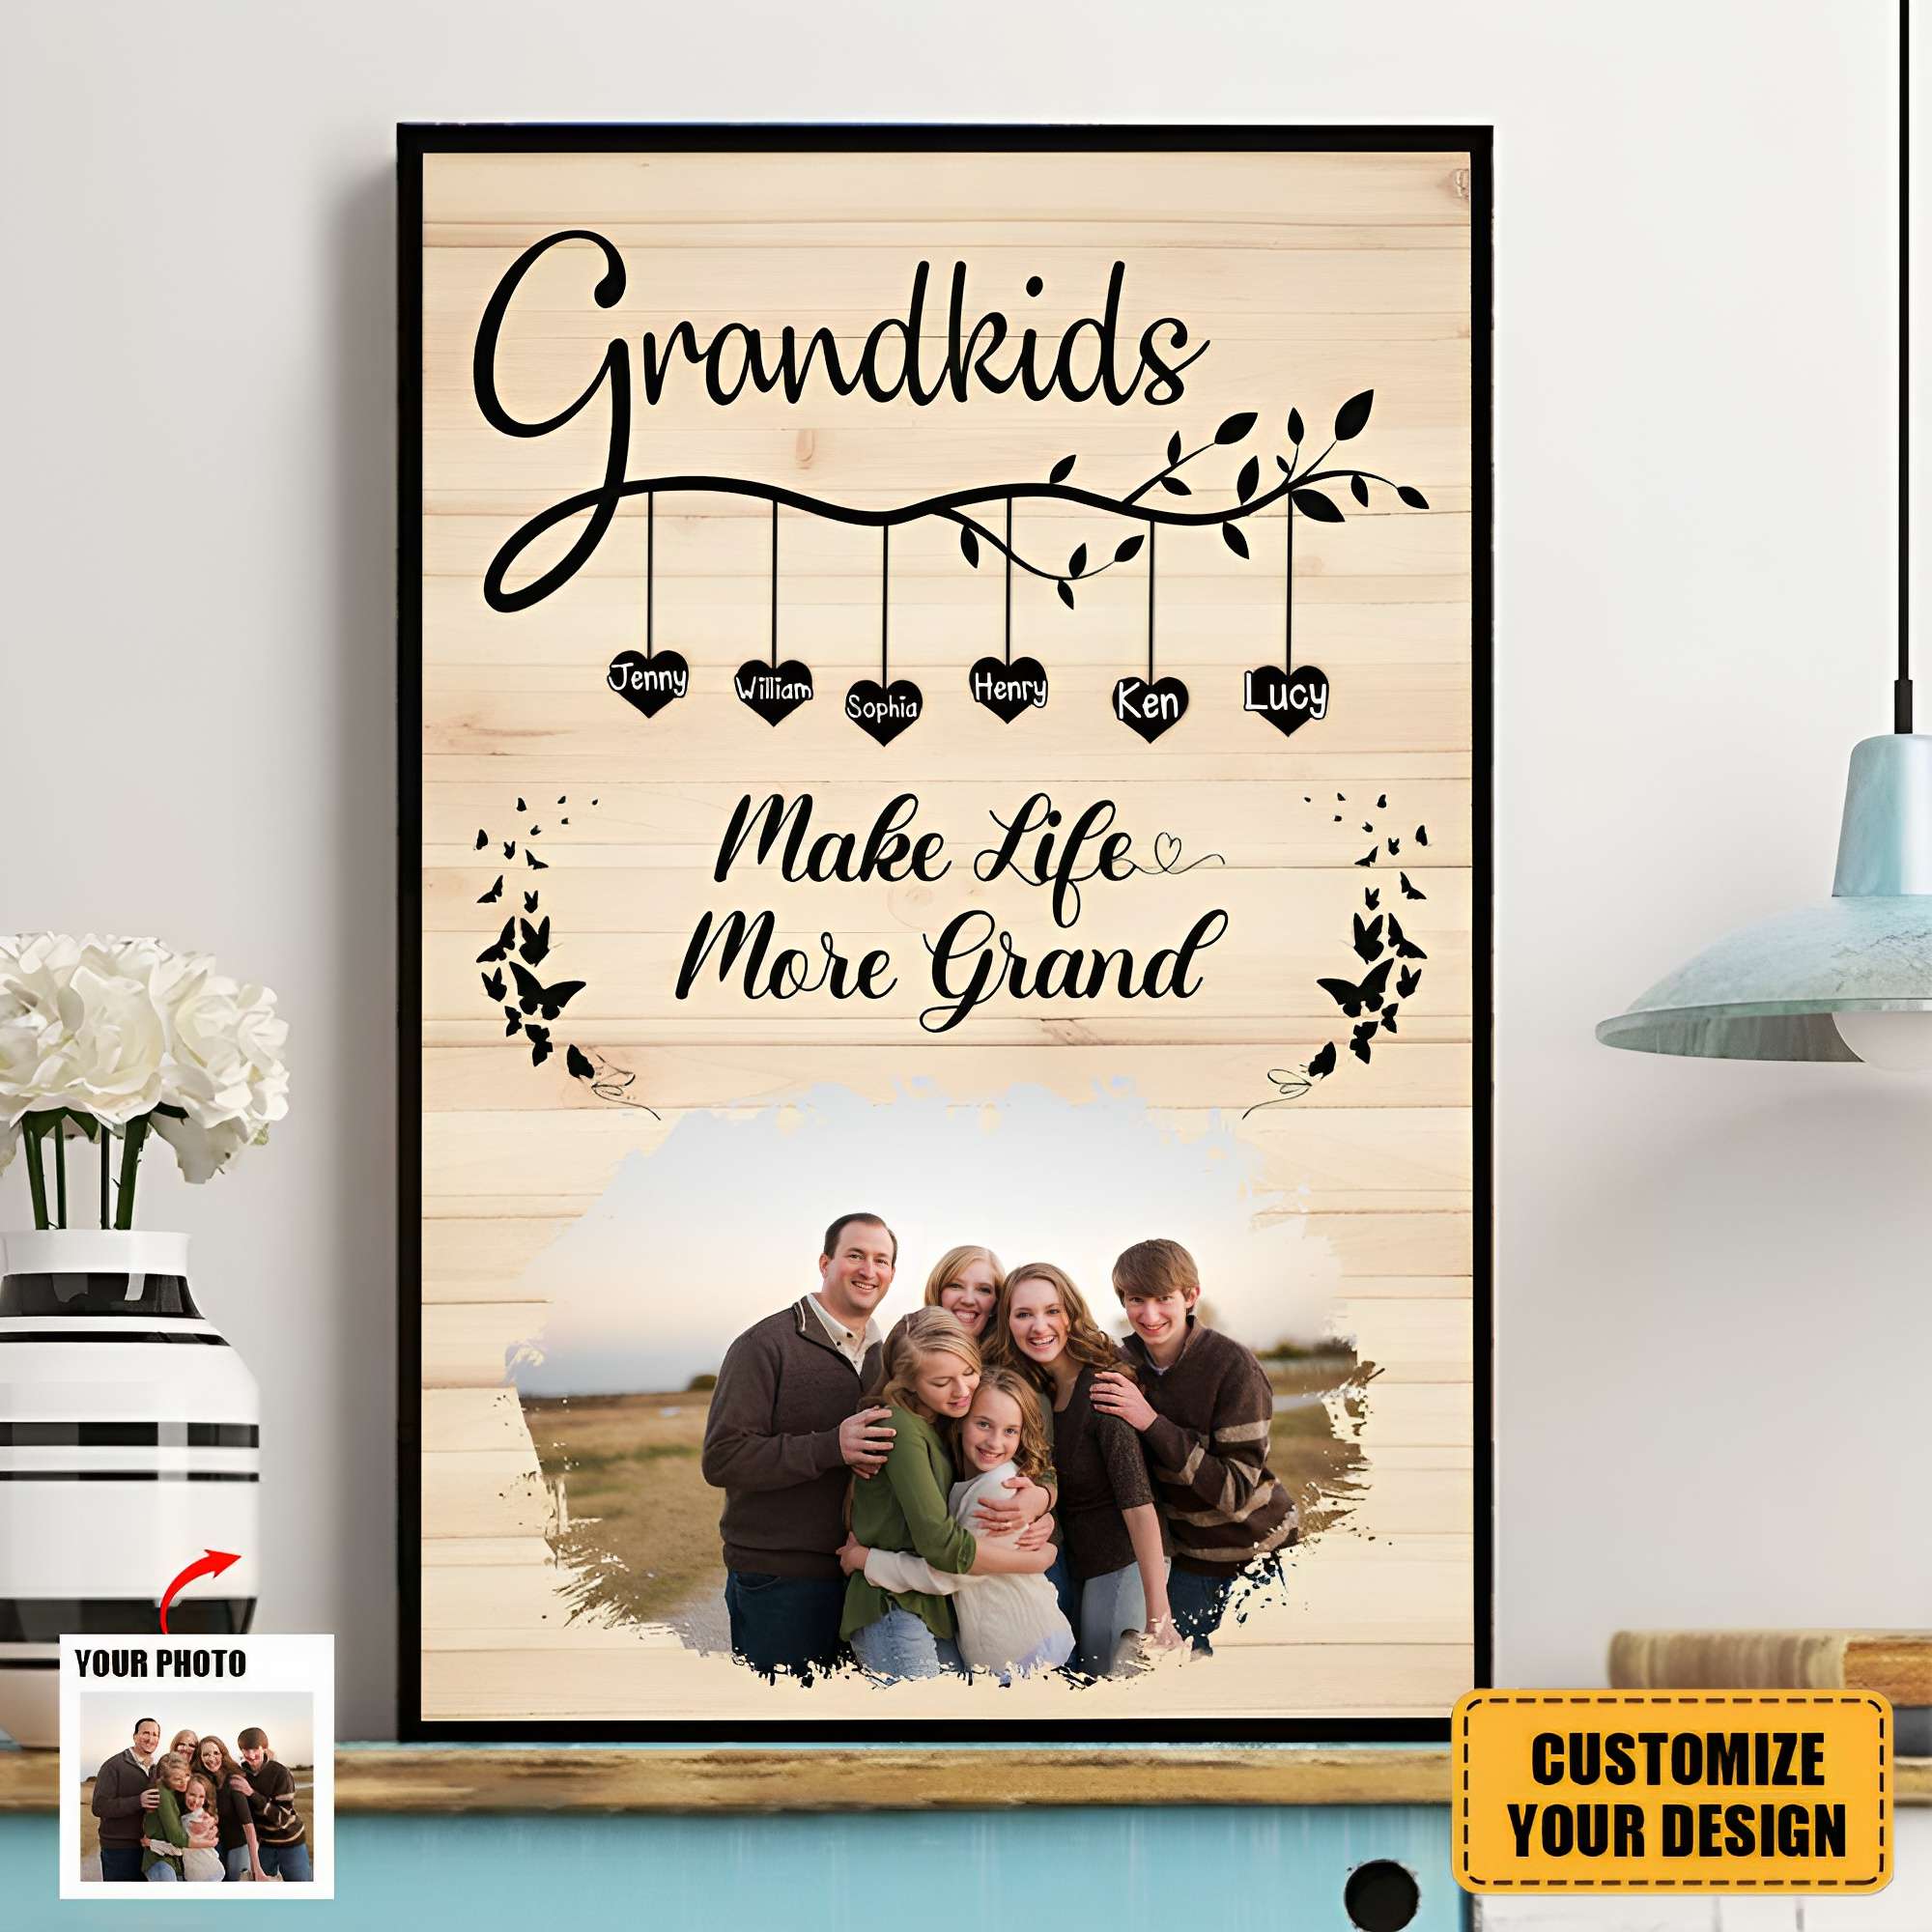 Grandkids Make Life More Grand - Personalized Photo Canvas